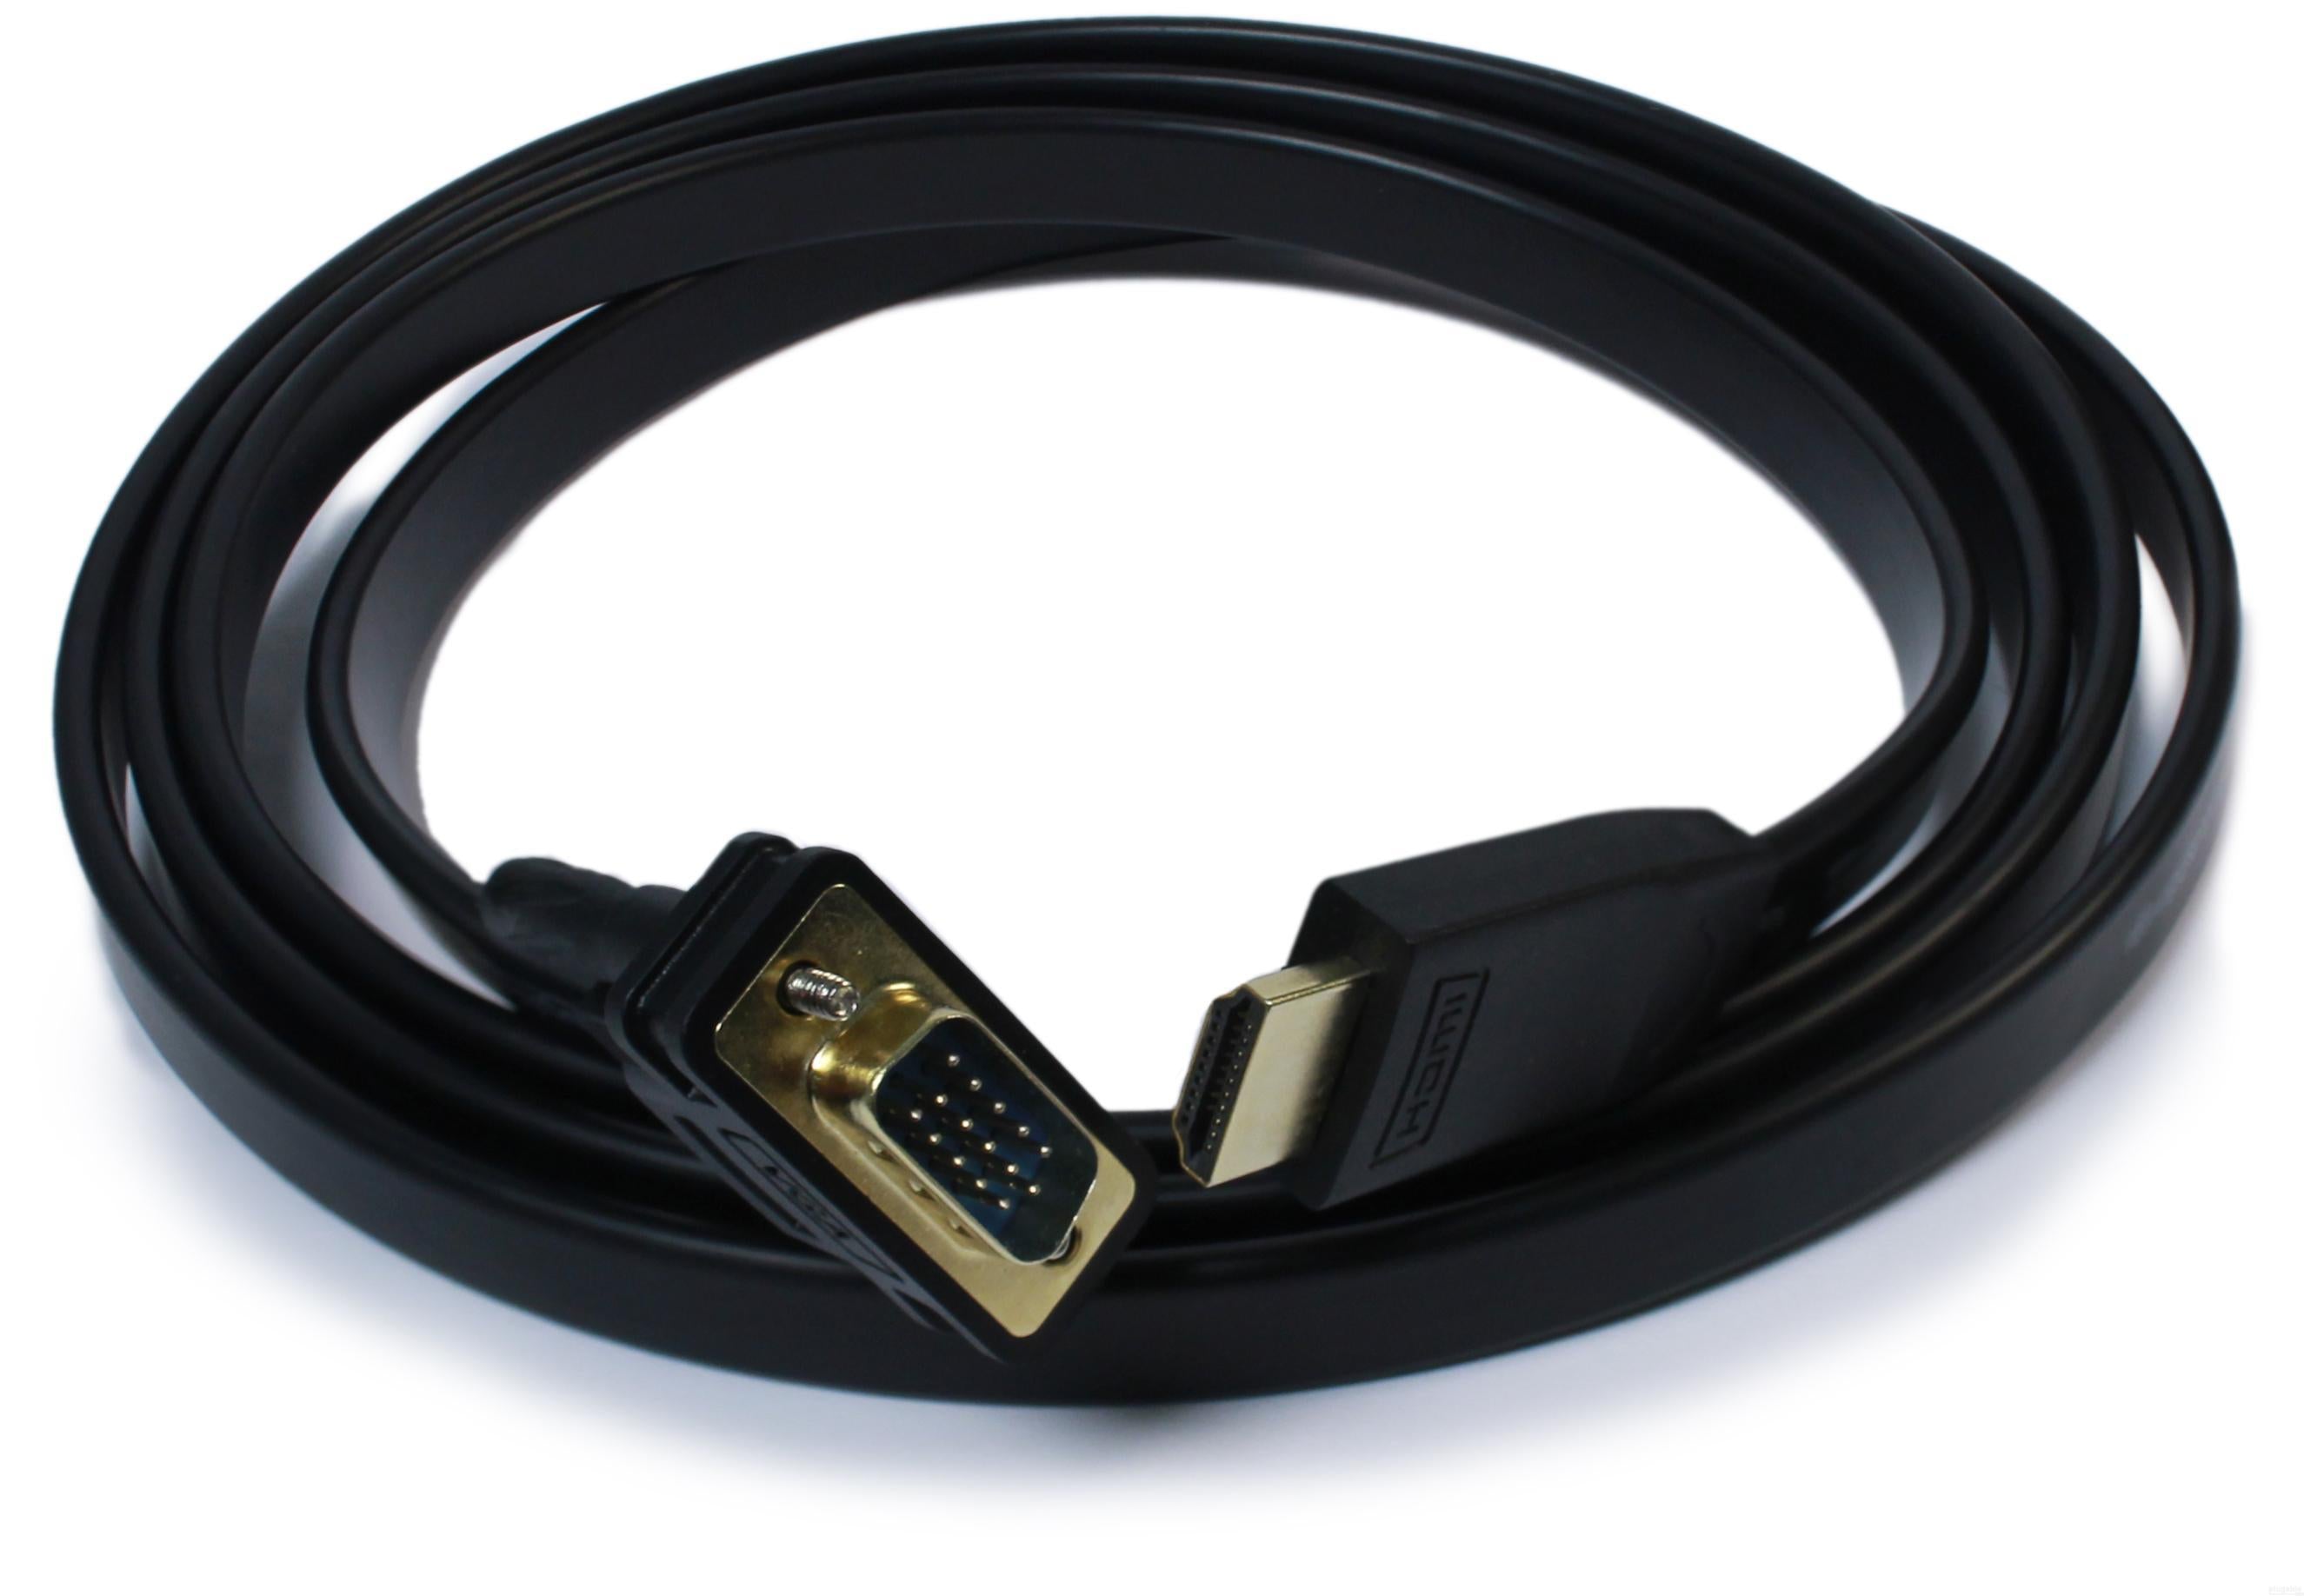 Plugable HDMI to VGA Active Adapter Cable